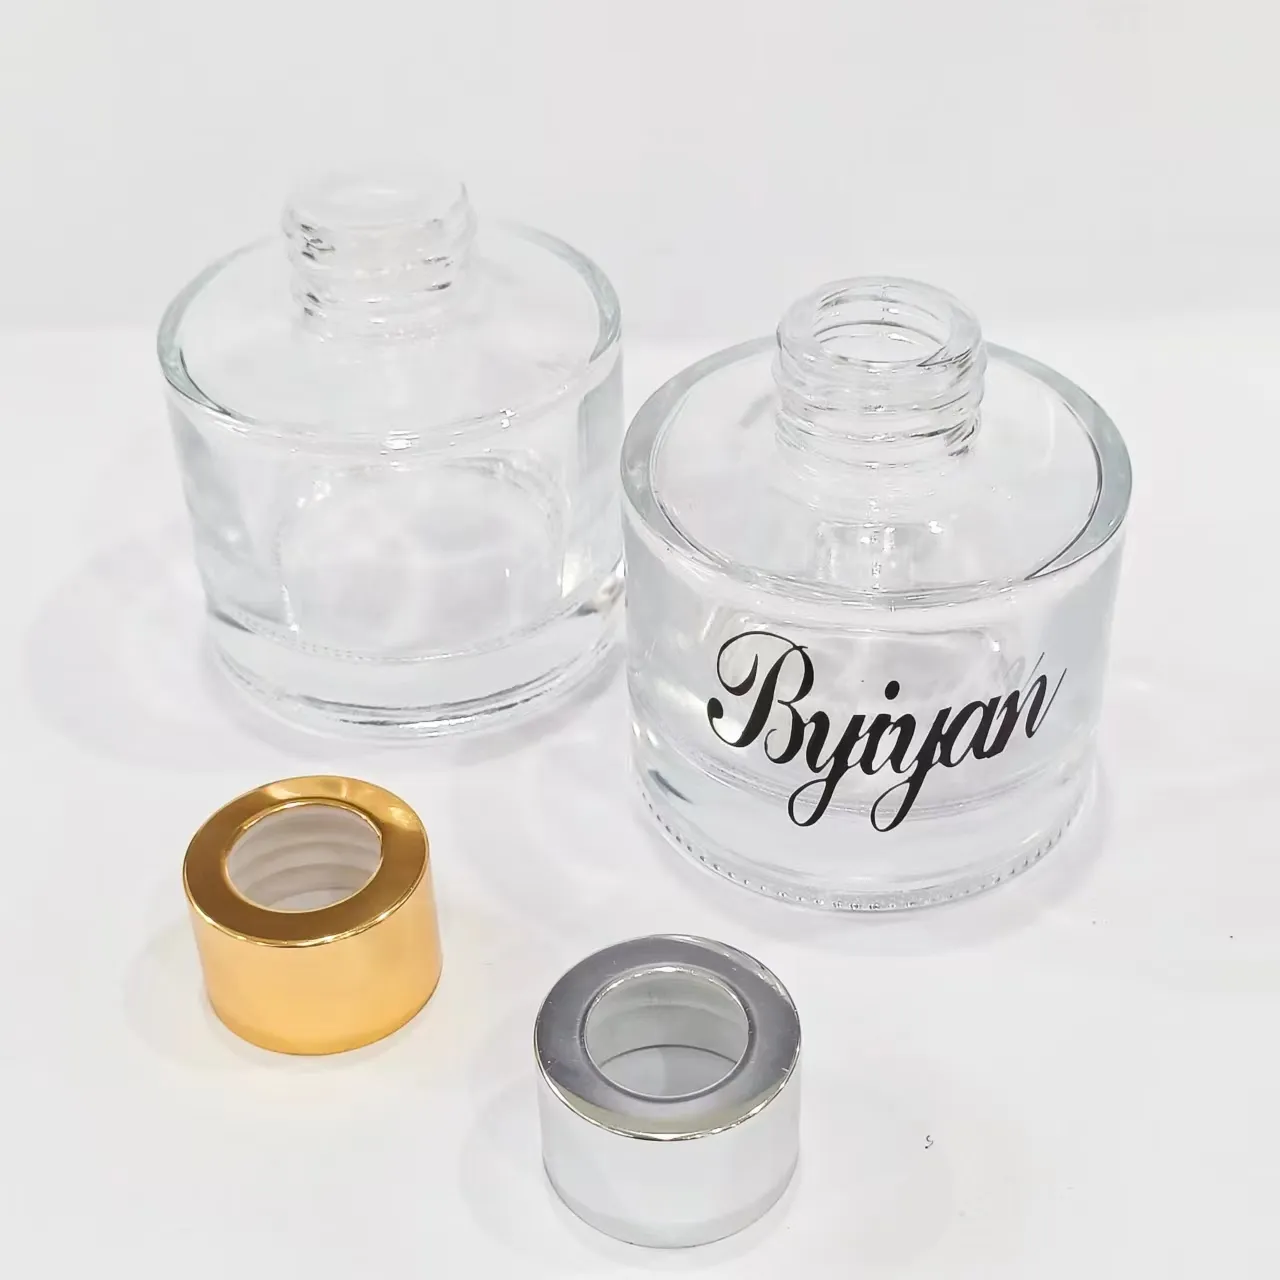 थोक लक्जरी अनुकूलित 200 मिलीलीटर गोल स्पष्ट कांच की बोतल बॉक्स के साथ घरेलू खुशबू रीड डिफ्यूज़र परफ्यूम